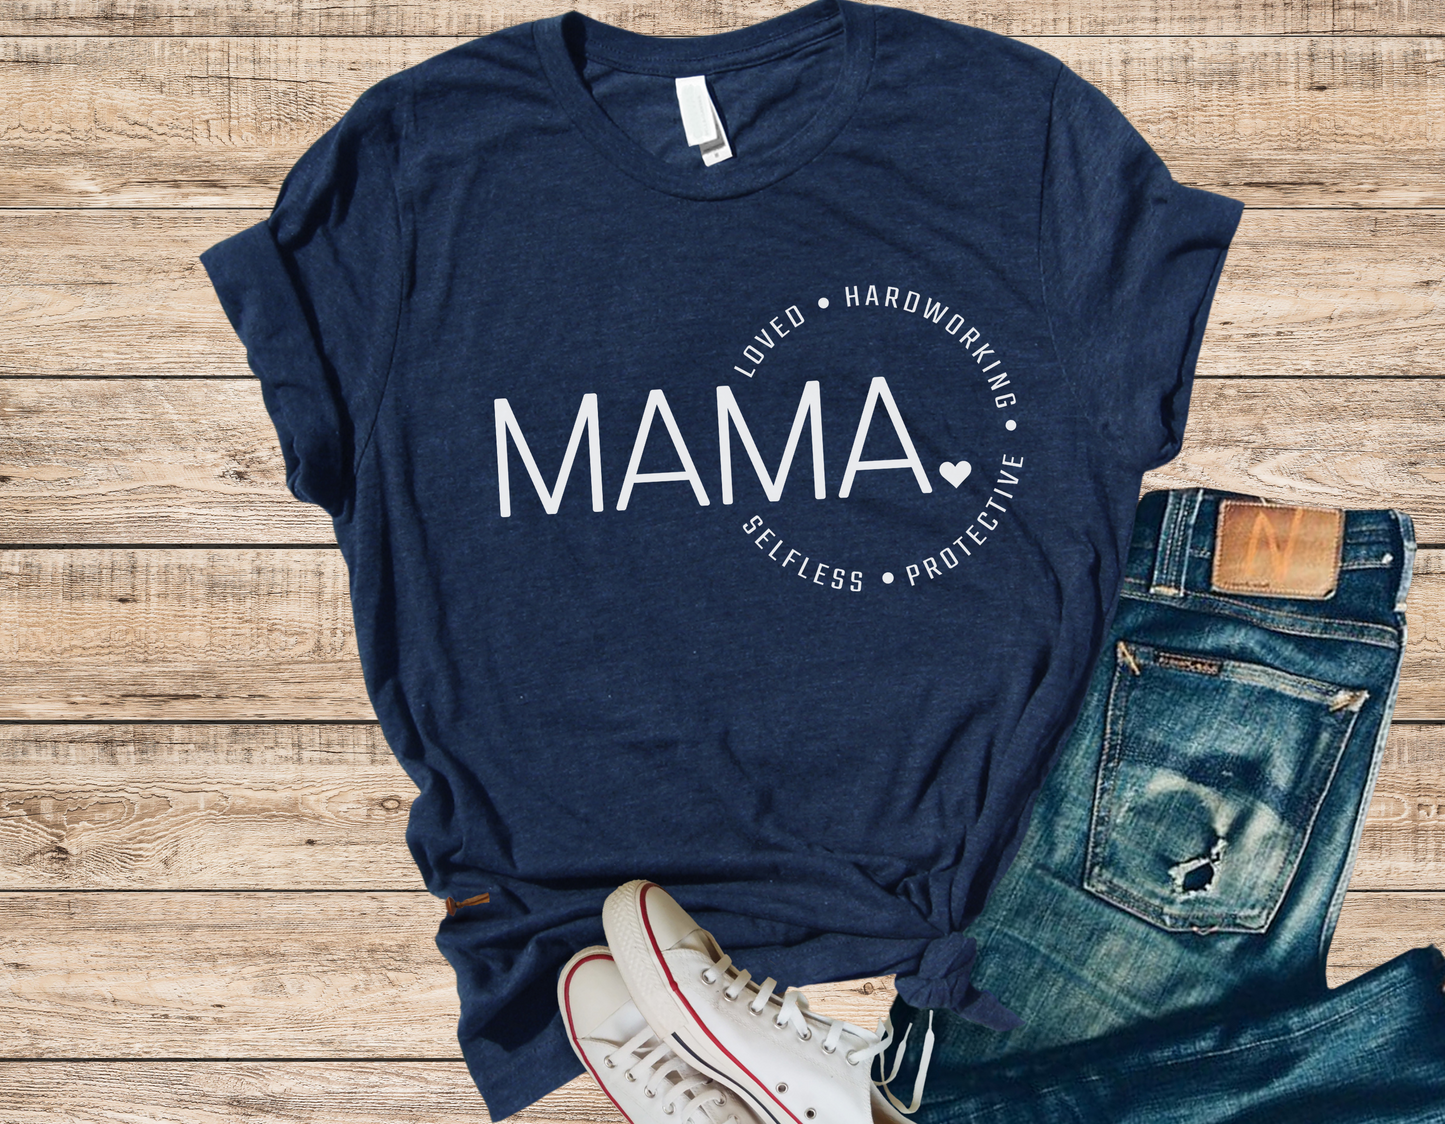 MaMa - Unisex T-Shirt